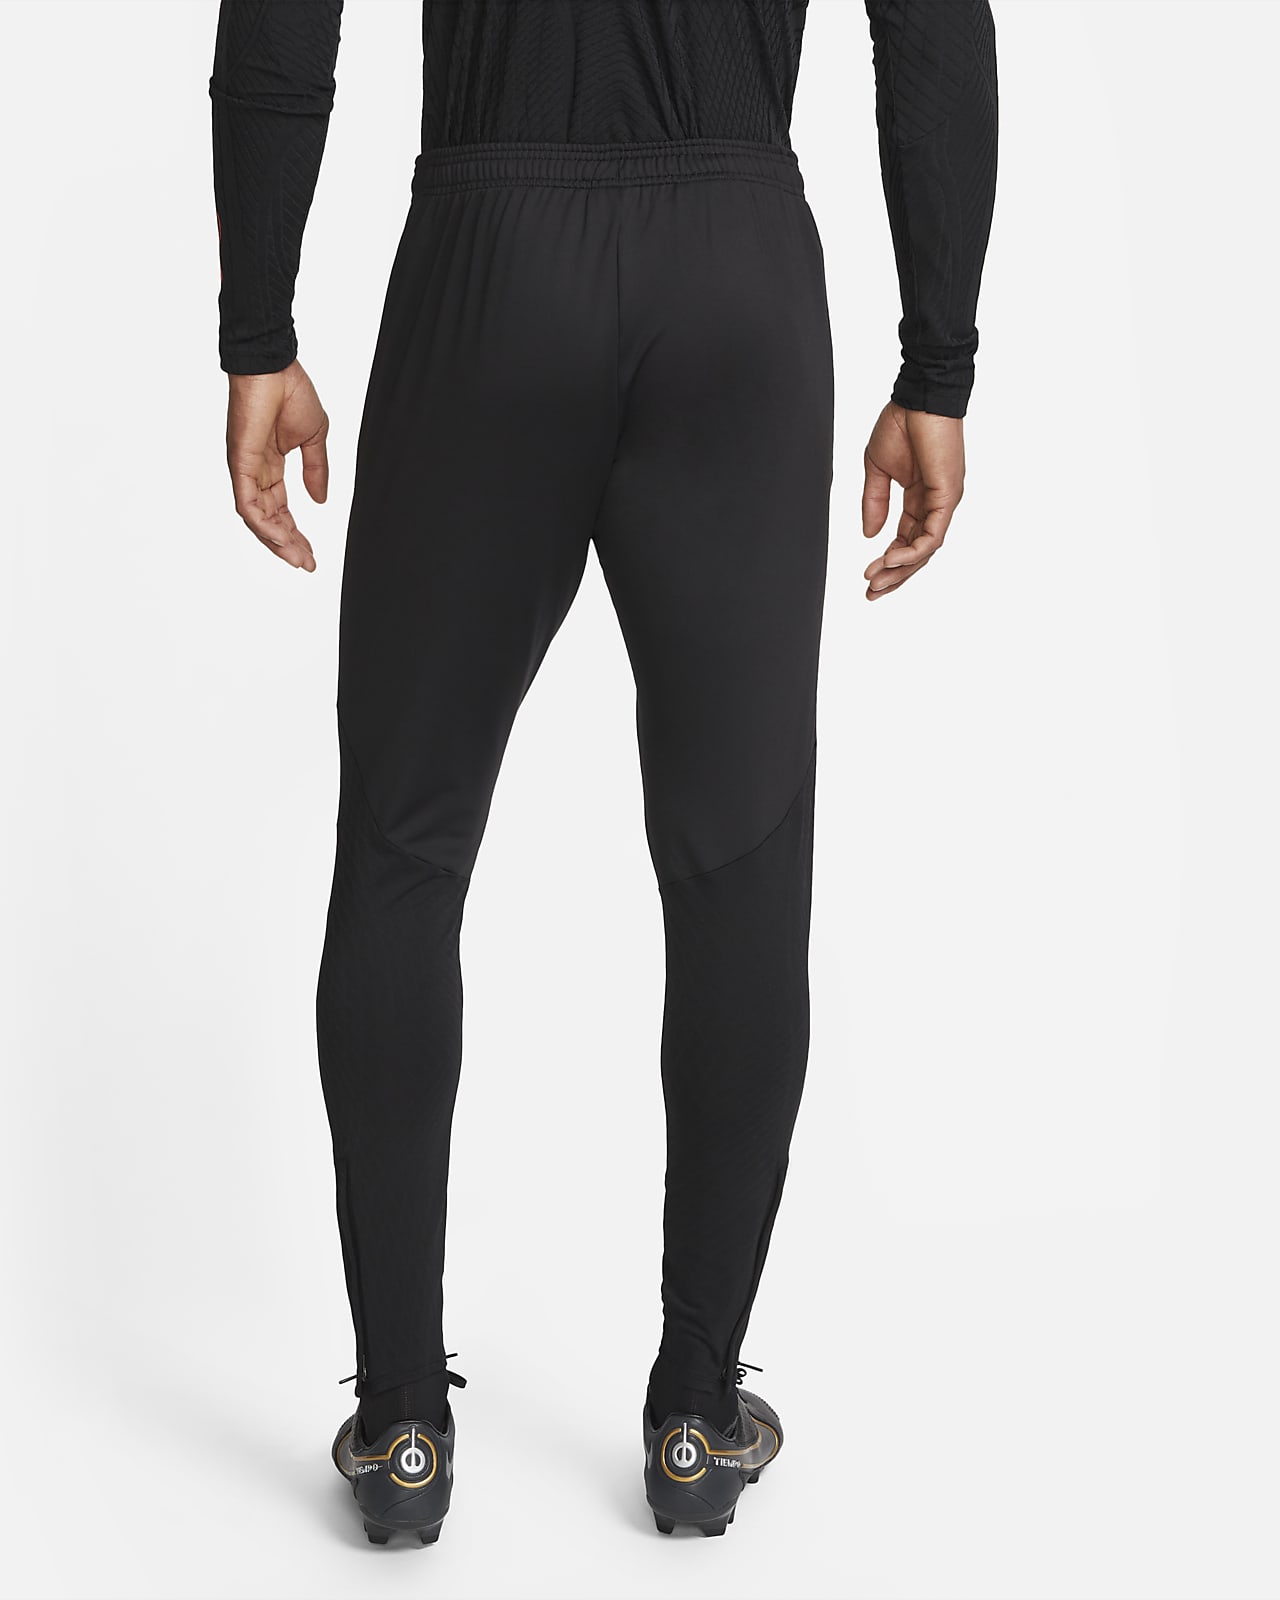 U.S. Strike Men's Nike Dri-FIT Knit Soccer Pants.